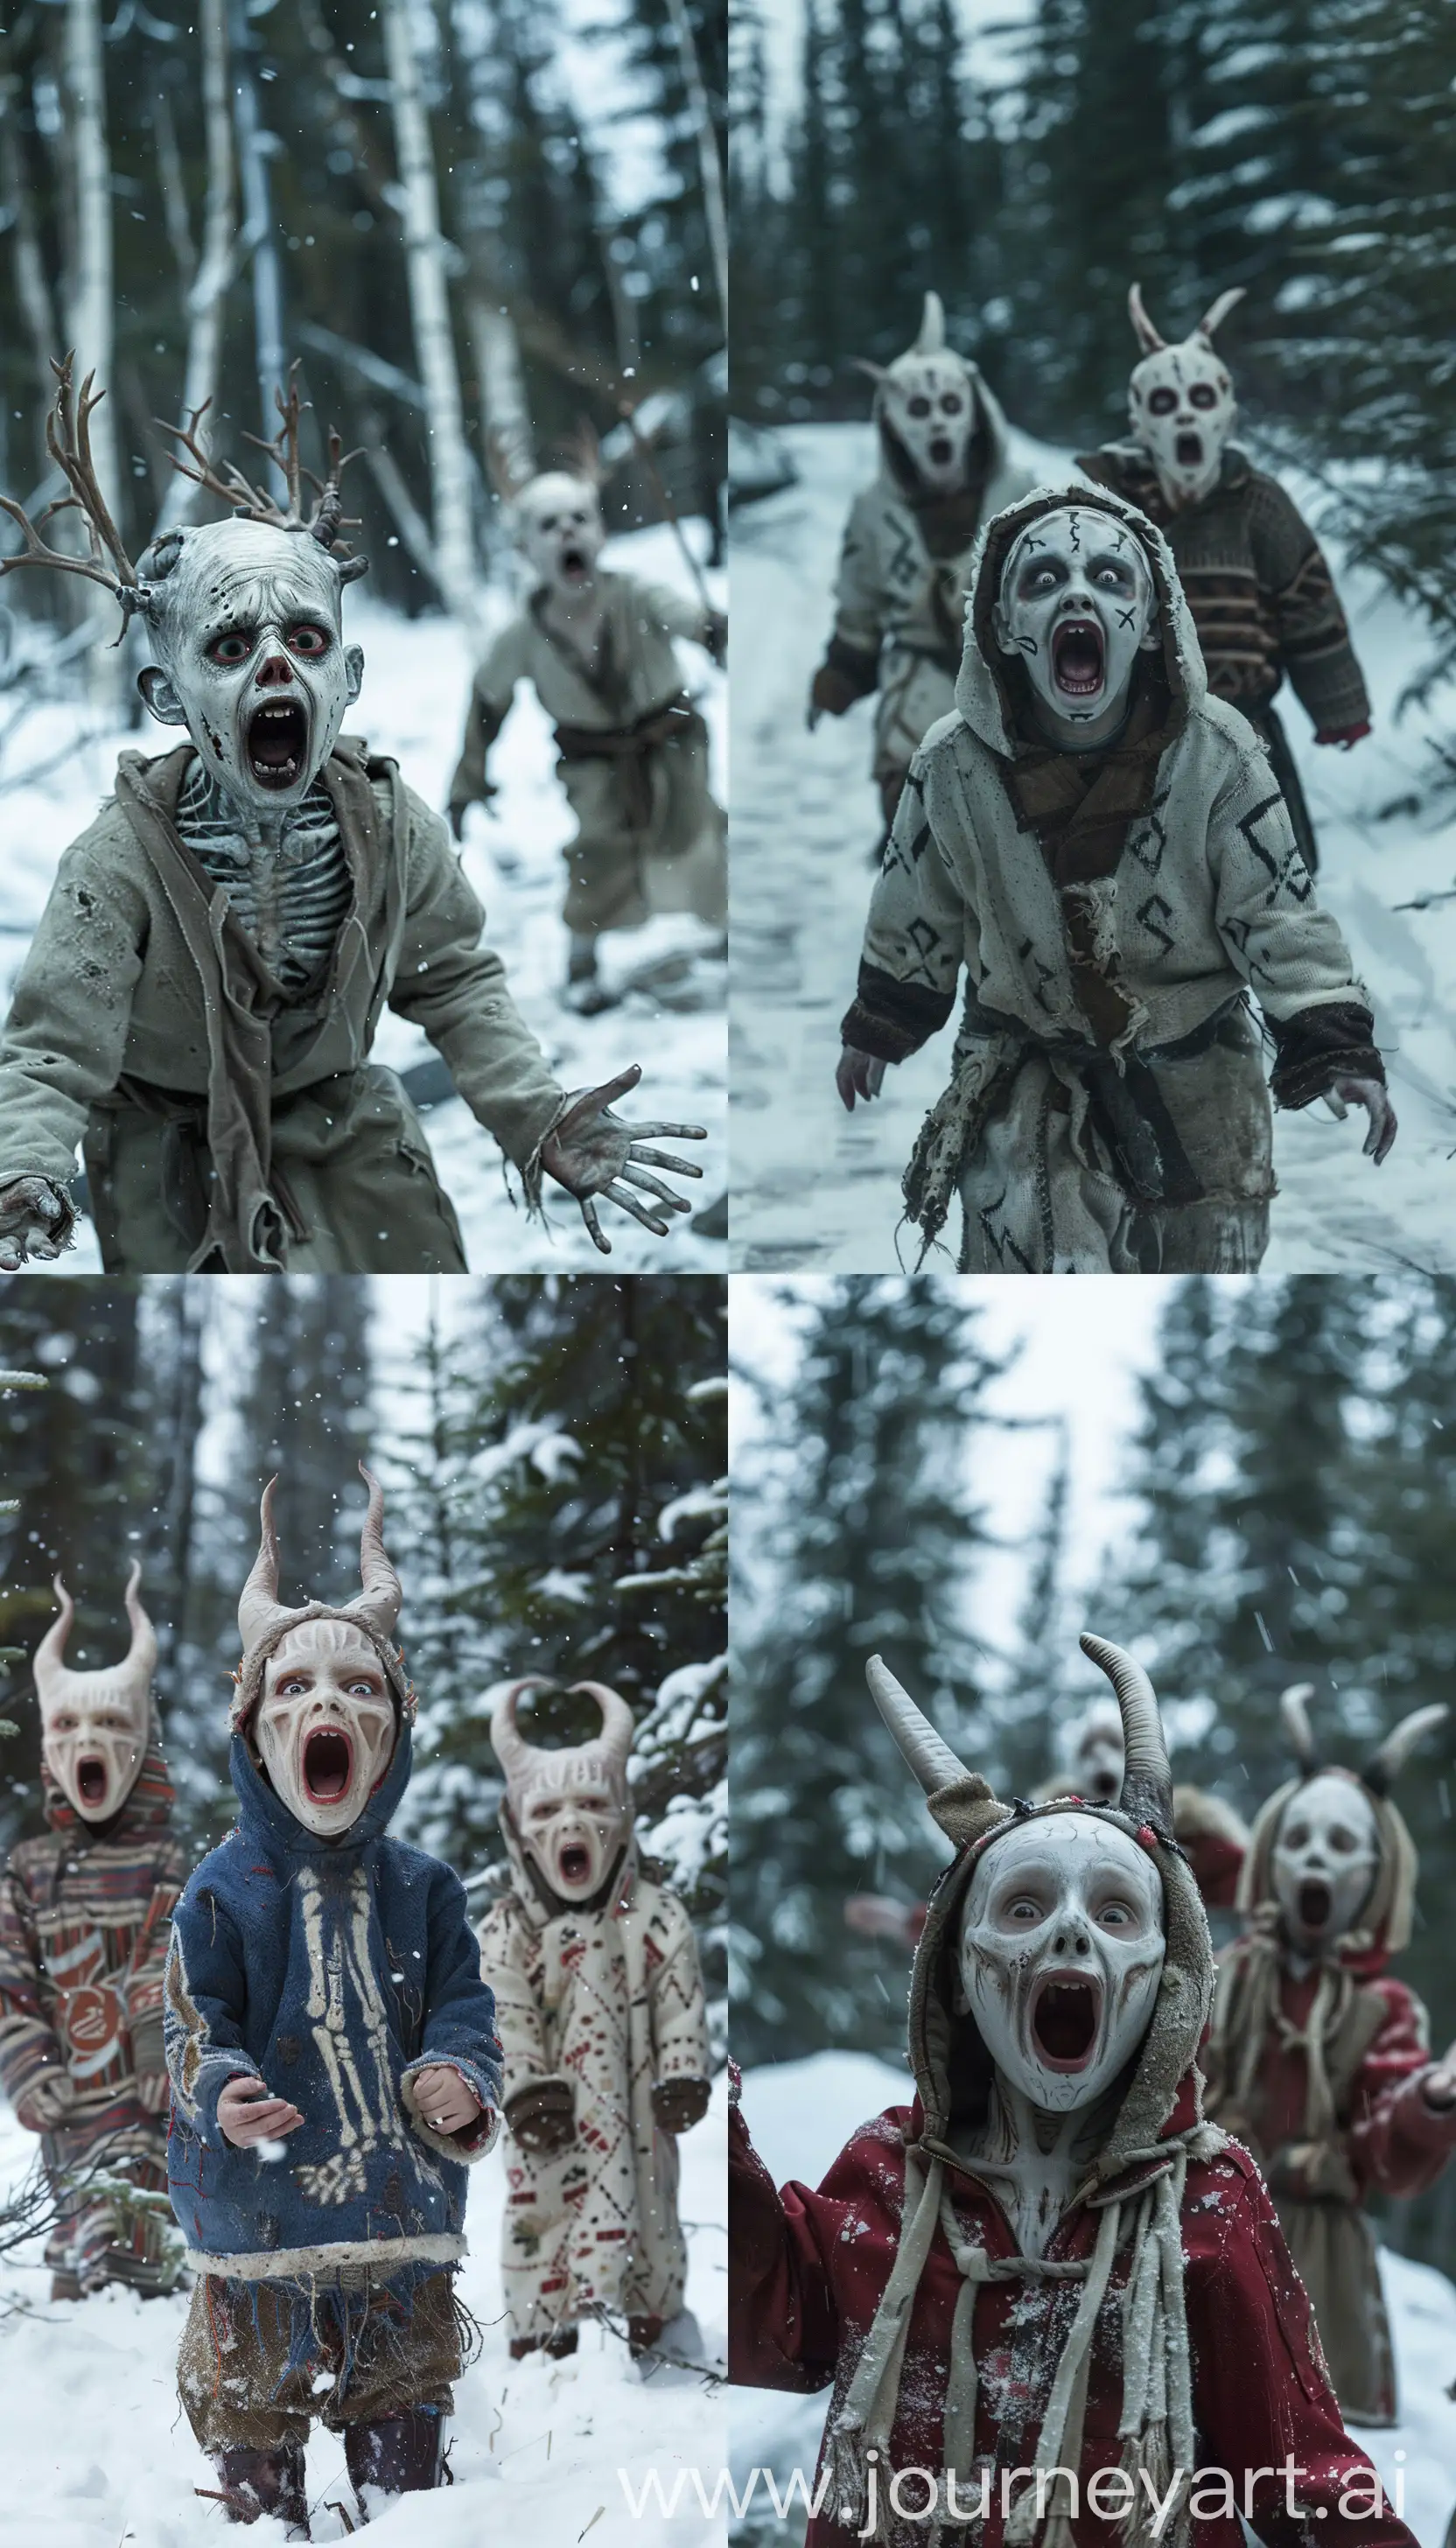 Terrifying-Deformed-Children-Screaming-in-Snowy-Alaskan-Forest